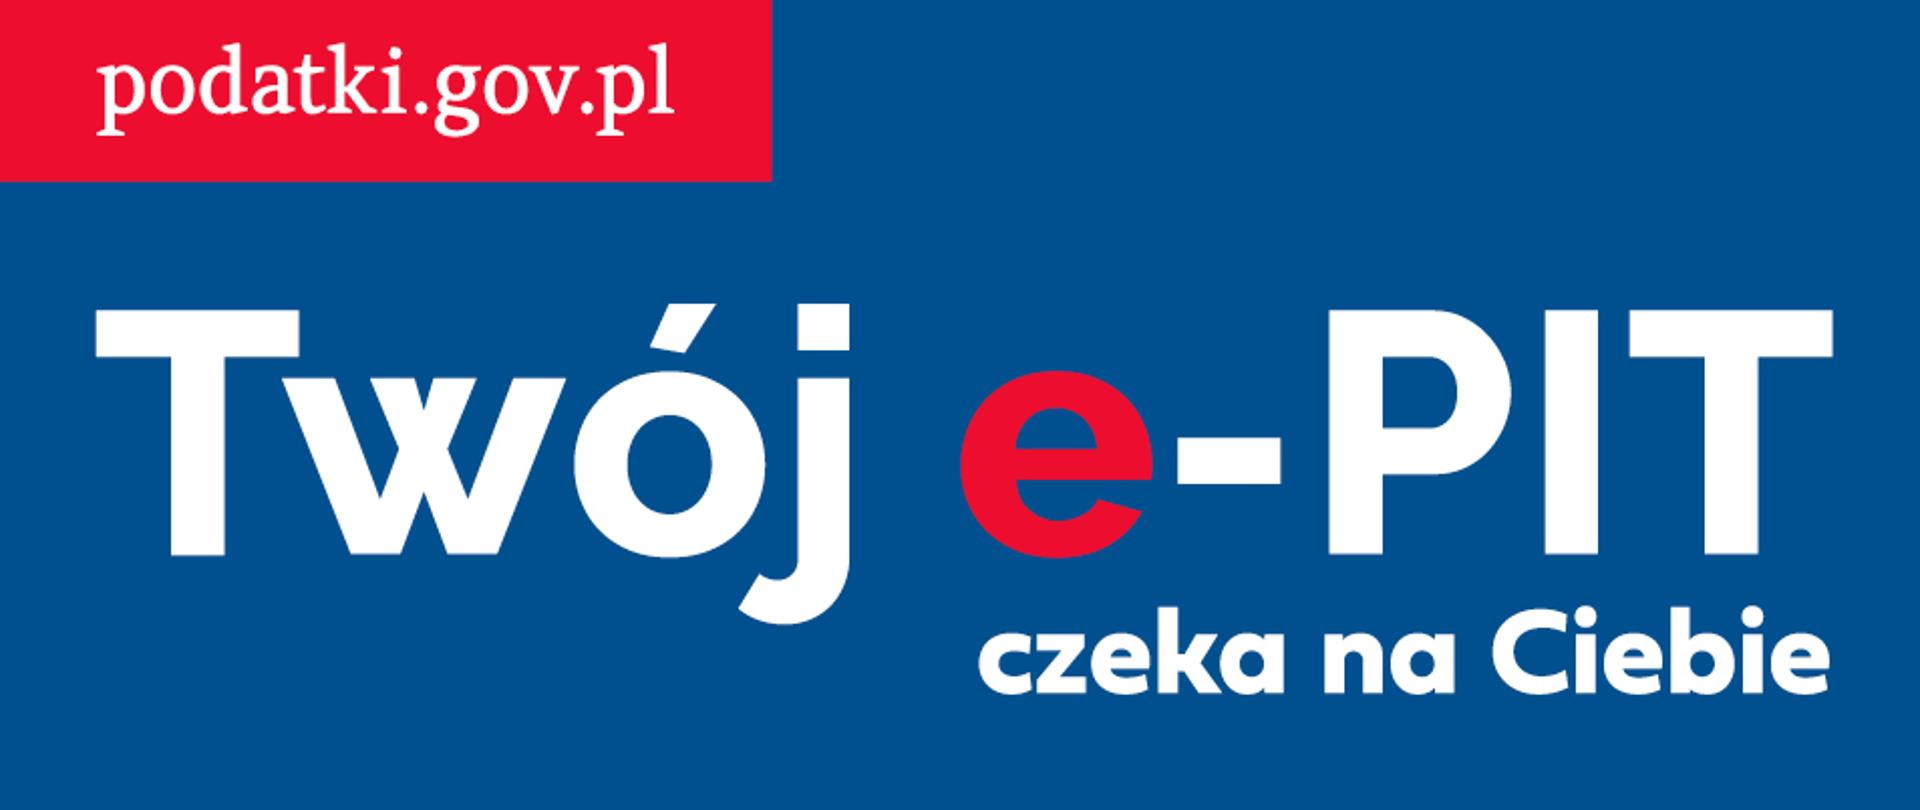 Na zdjęciu napis Twój e-PIT i napis podatki.gov.pl